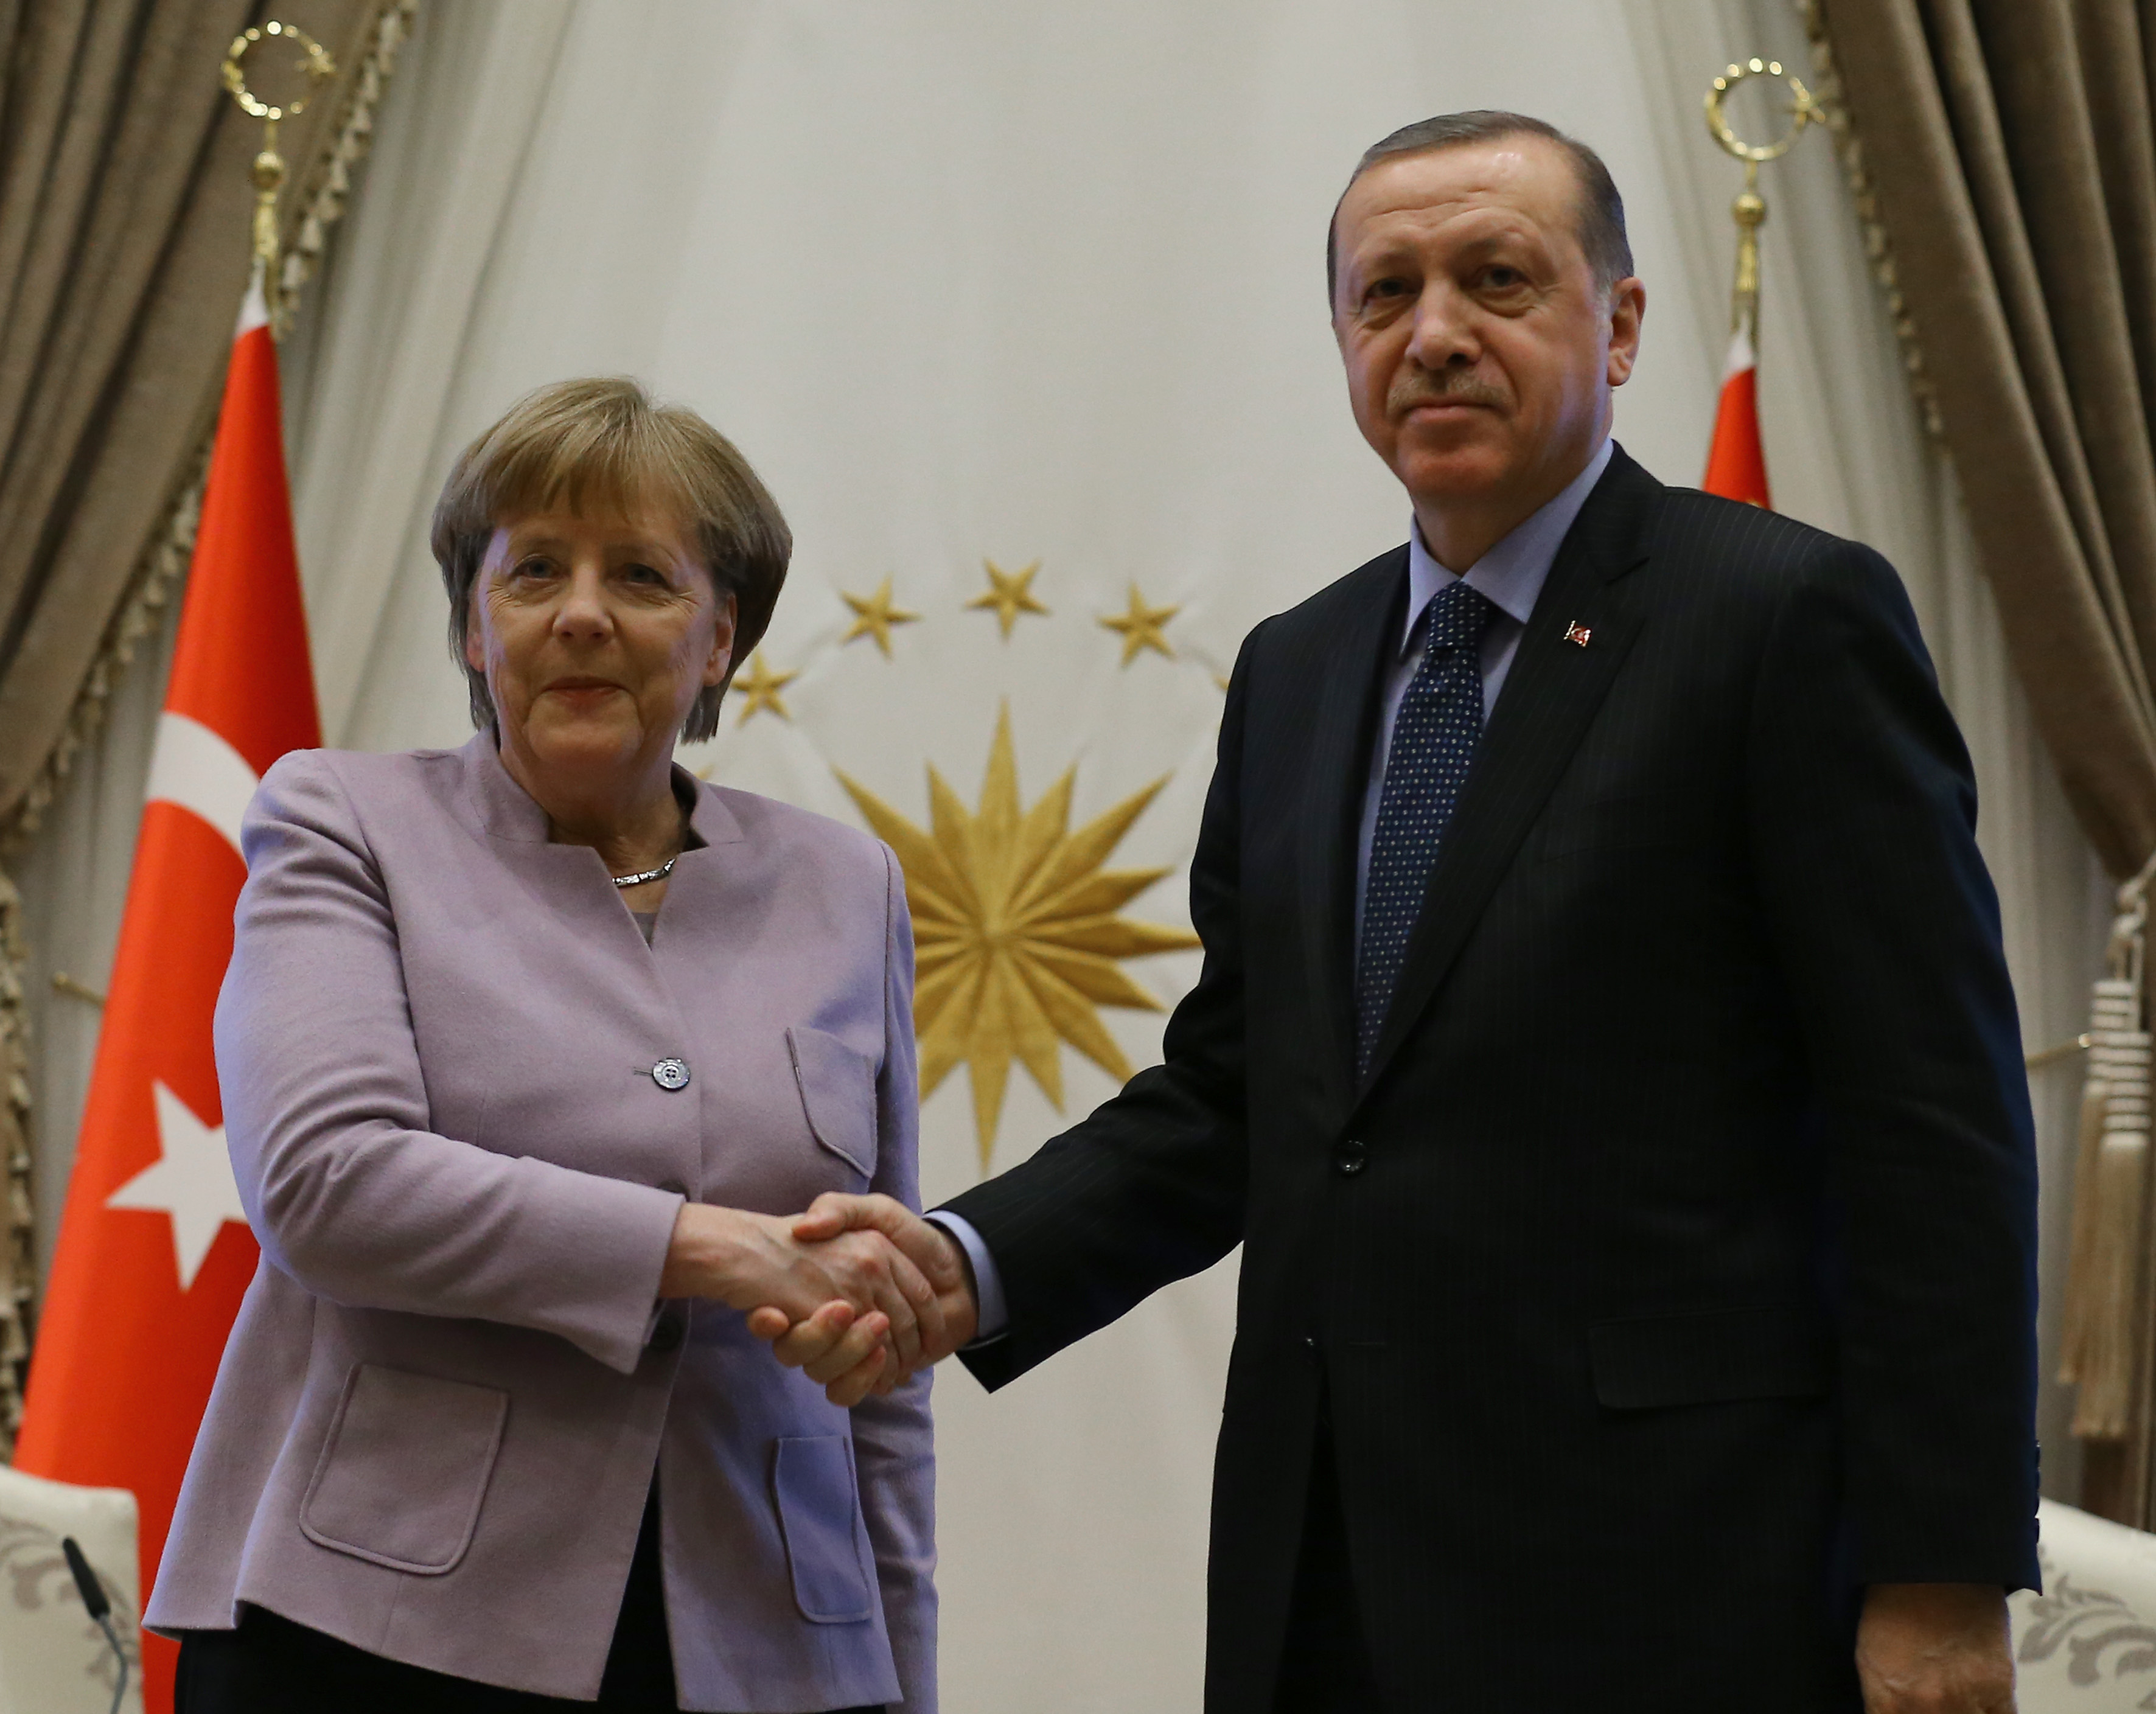 ANKARA, TURKEY - FEBRUARY 2 : Turkish President Recep Tayyip Erdogan (R) and German Chancellor Angela Merkel (L) shake hands during a press conference after their meeting at the Presidential Complex in Ankara, Turkey on February 2, 2017. ( Halil Sağırkaya - Anadolu Agency )